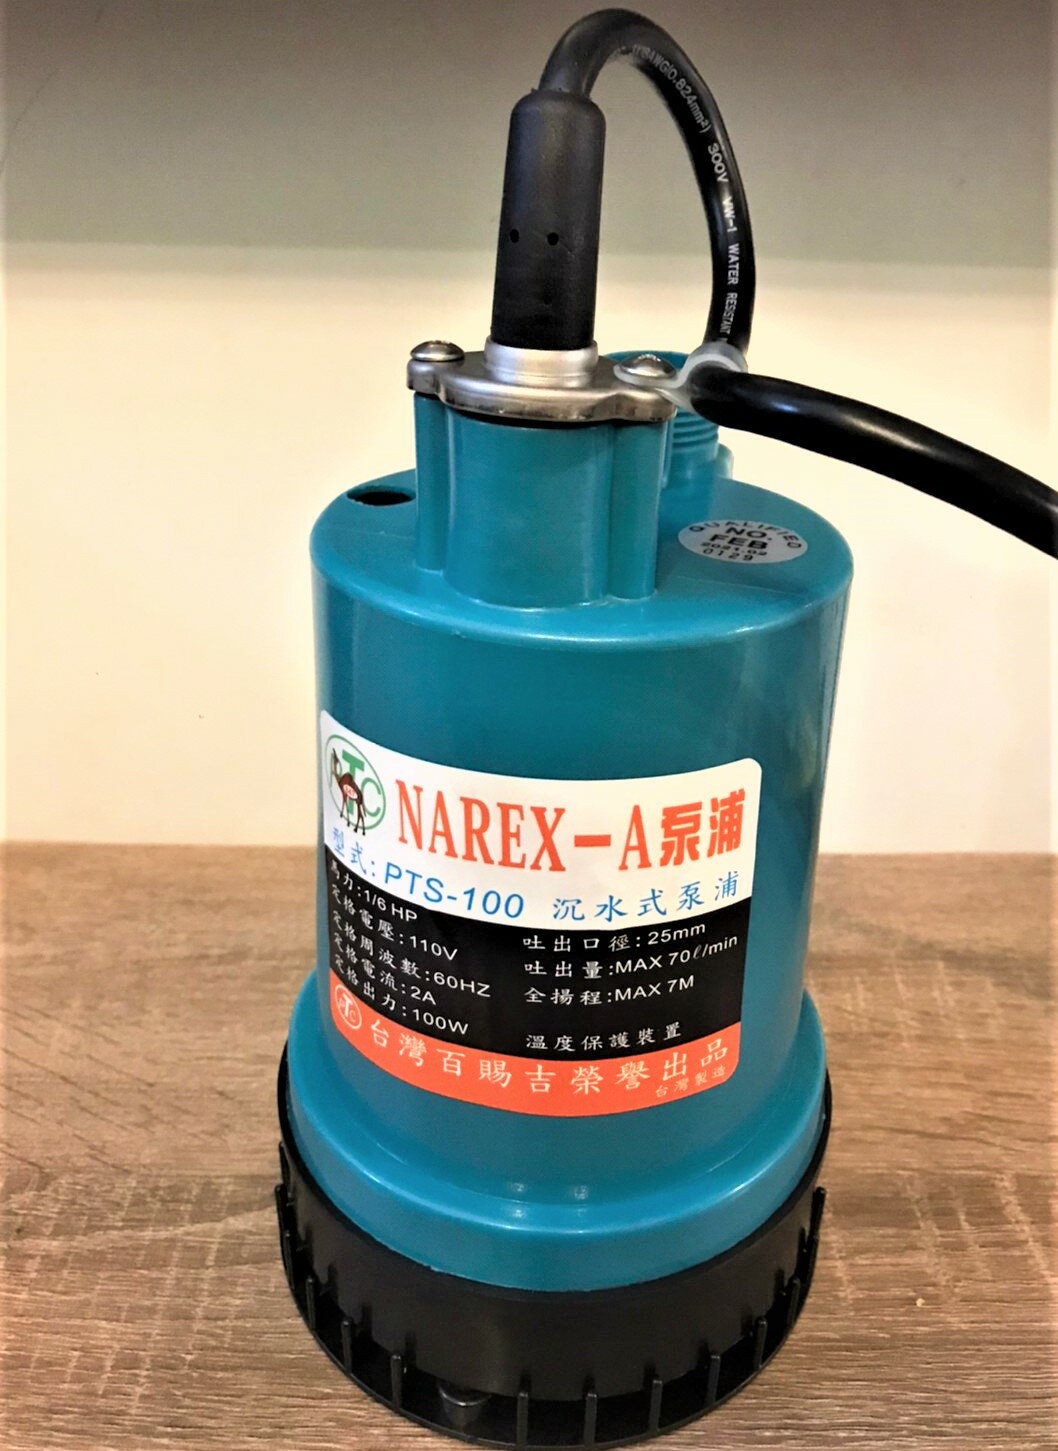 NAREX-A拿力士 駝牌泵浦 PTS-100 不易堵塞 吸水力強 低耗電大流量 台灣製造